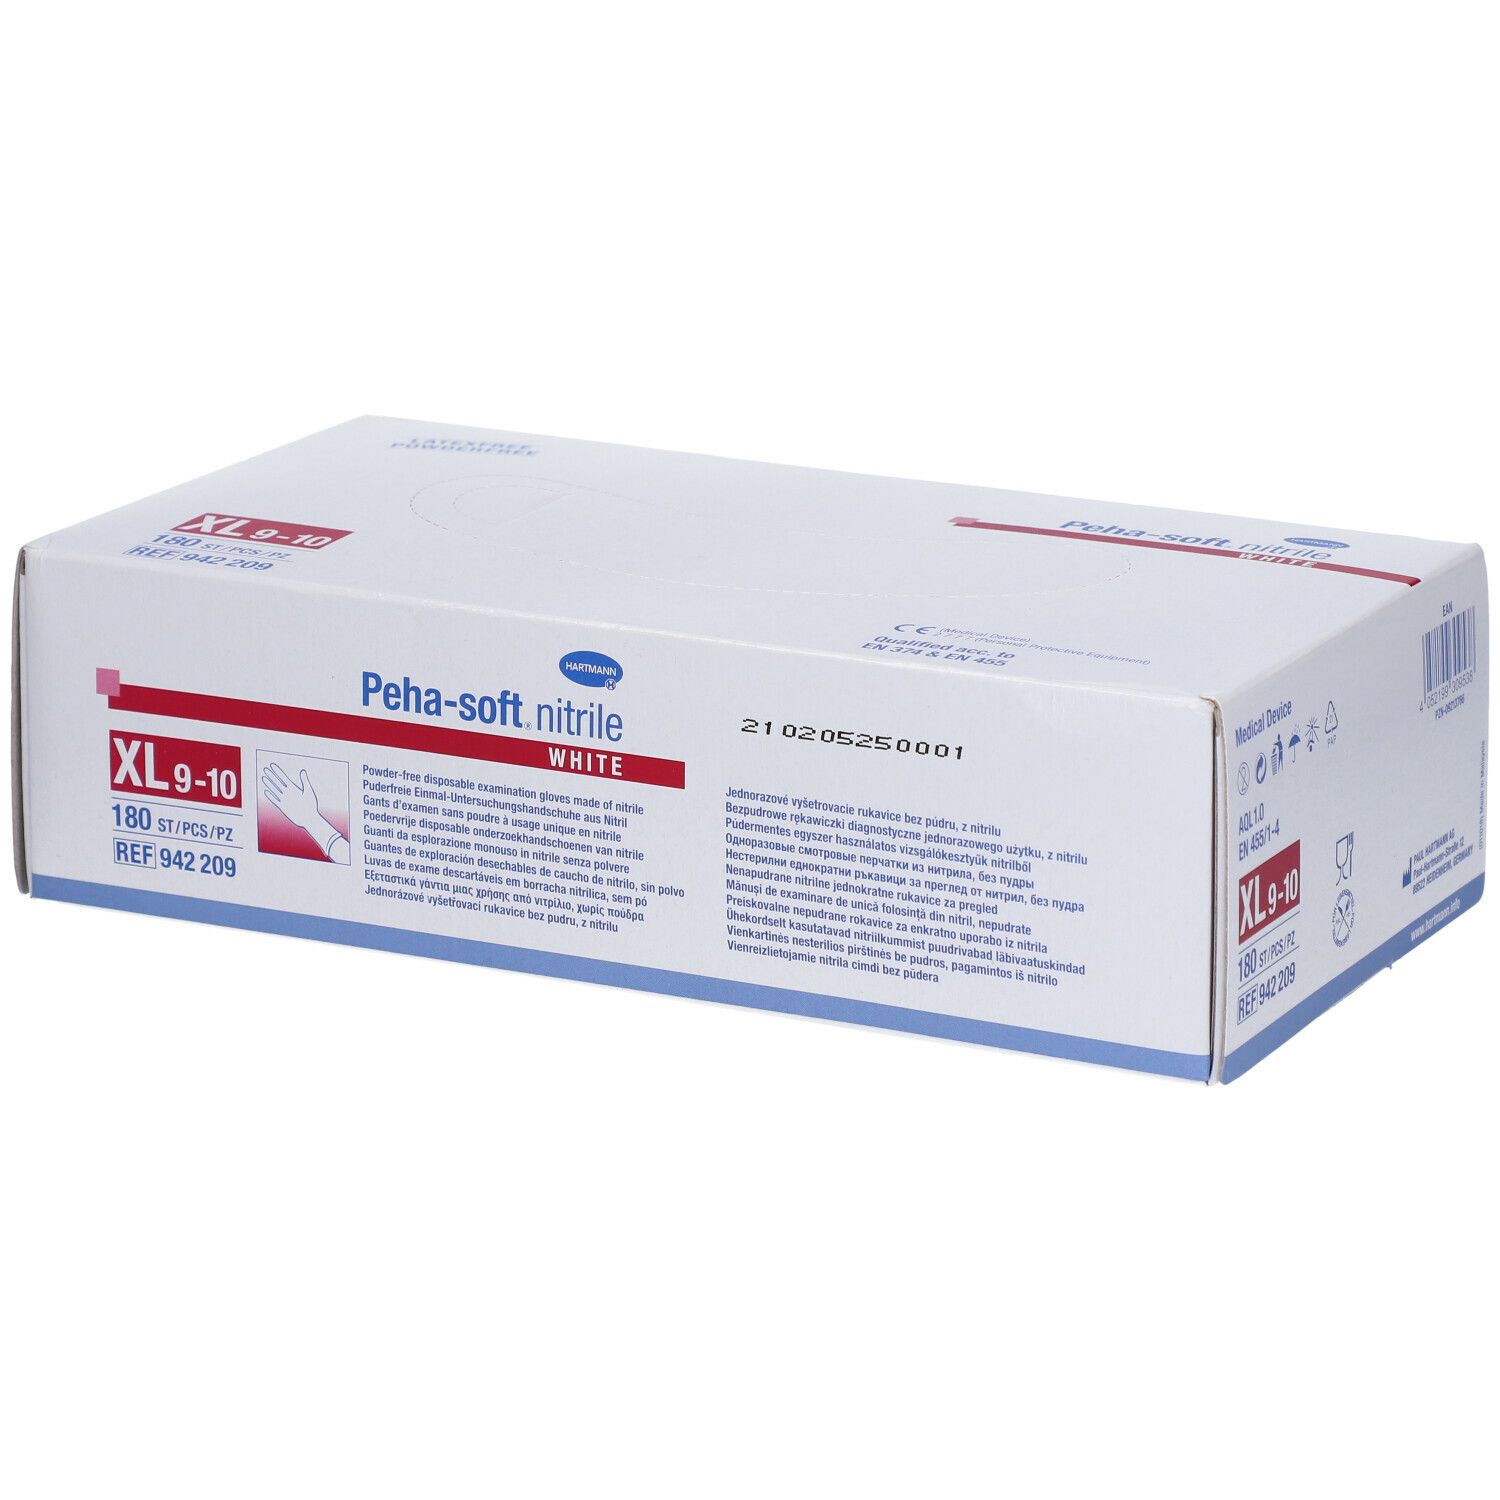 Peha-soft® nitrile white puderfrei unsteril Untersuchungshandschuhe Gr. XL 9-10